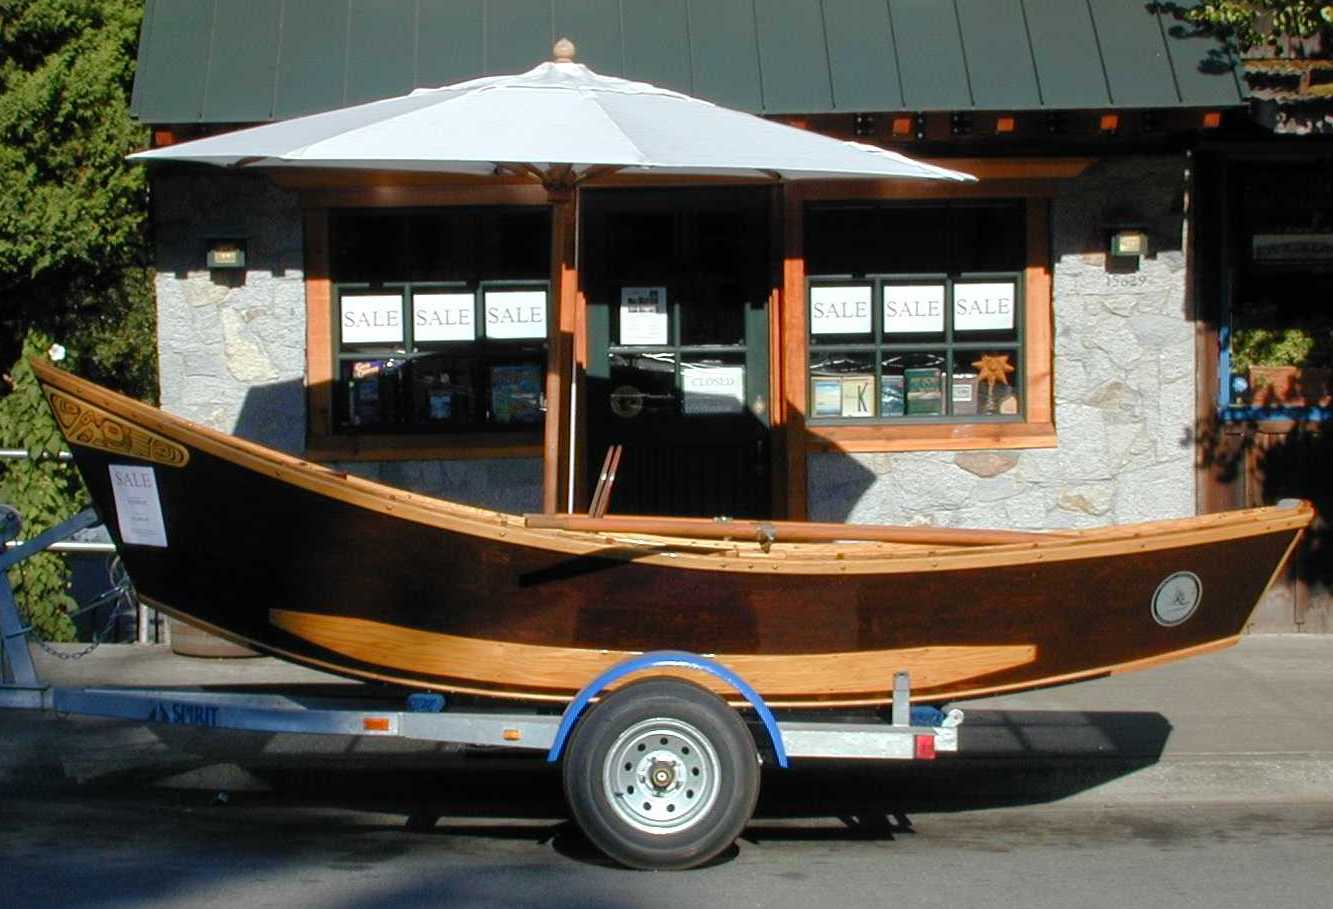 Wood Drift Boat Plans